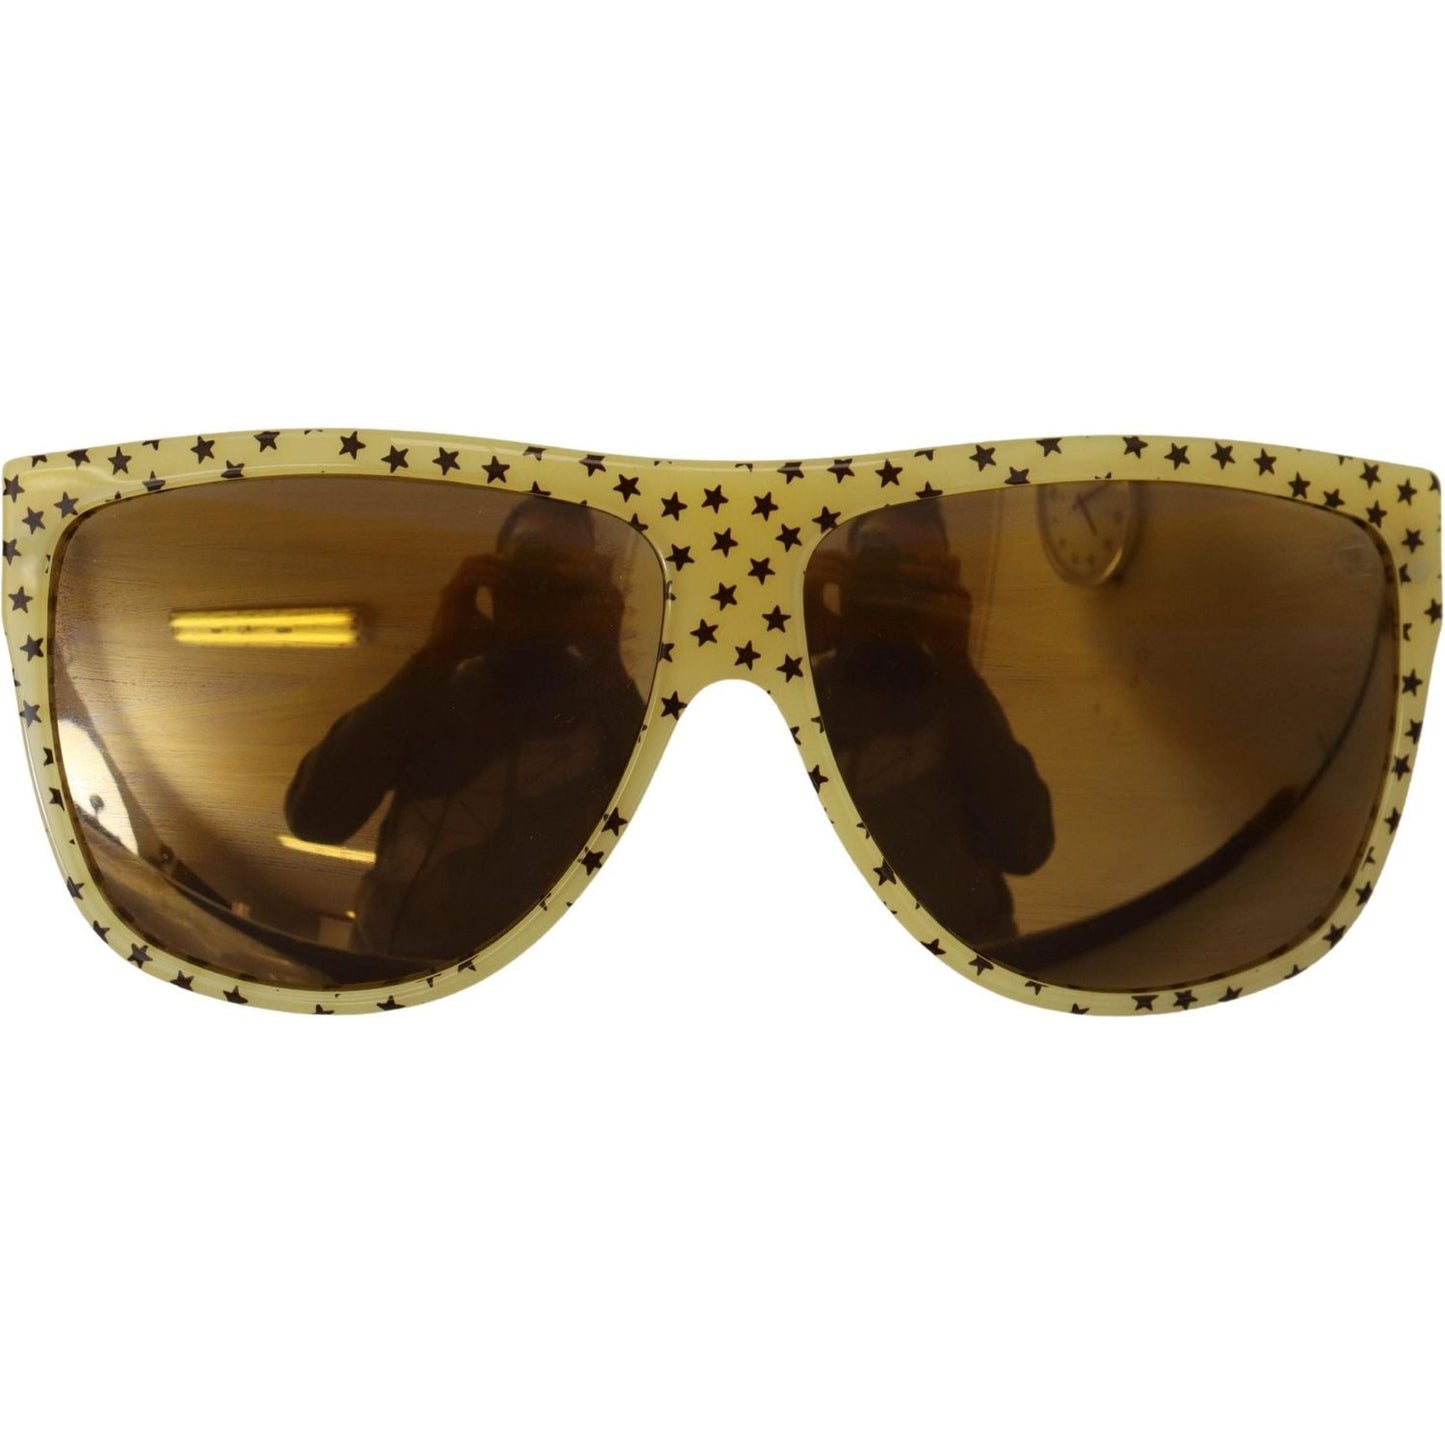 Dolce & Gabbana Stellar Chic Square Sunglasses in Yellow yellow-stars-acetate-square-shades-dg4125-sunglasses IMG_5276-scaled-9b86132b-db3.jpg